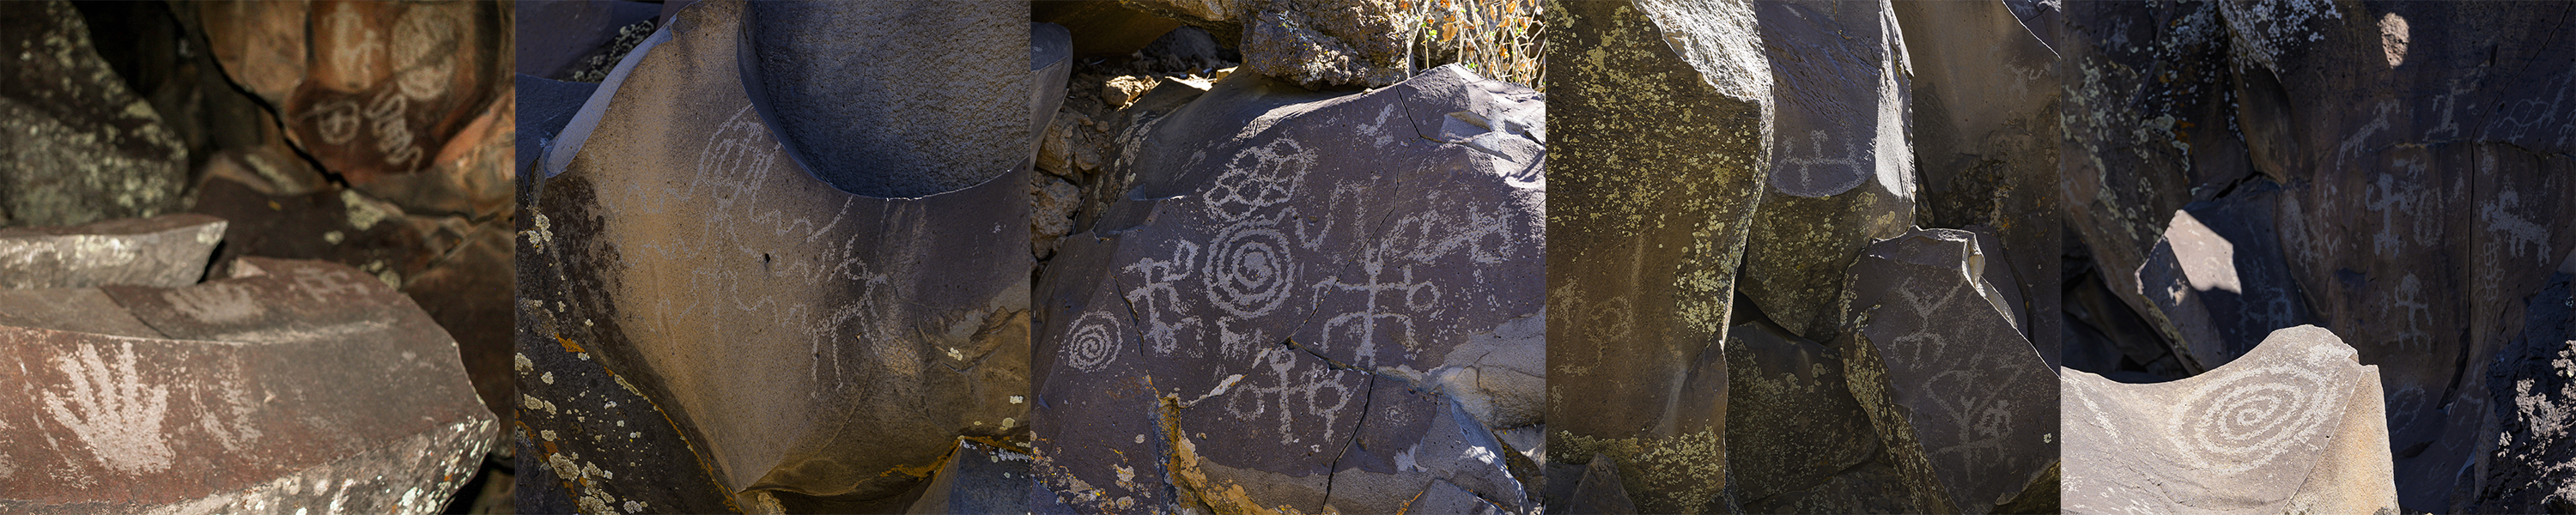 Geometric designs, spirals, handprints, anthropomorphs (human-like figures) and zoomorphs (animal-like figures) on basalt rock.